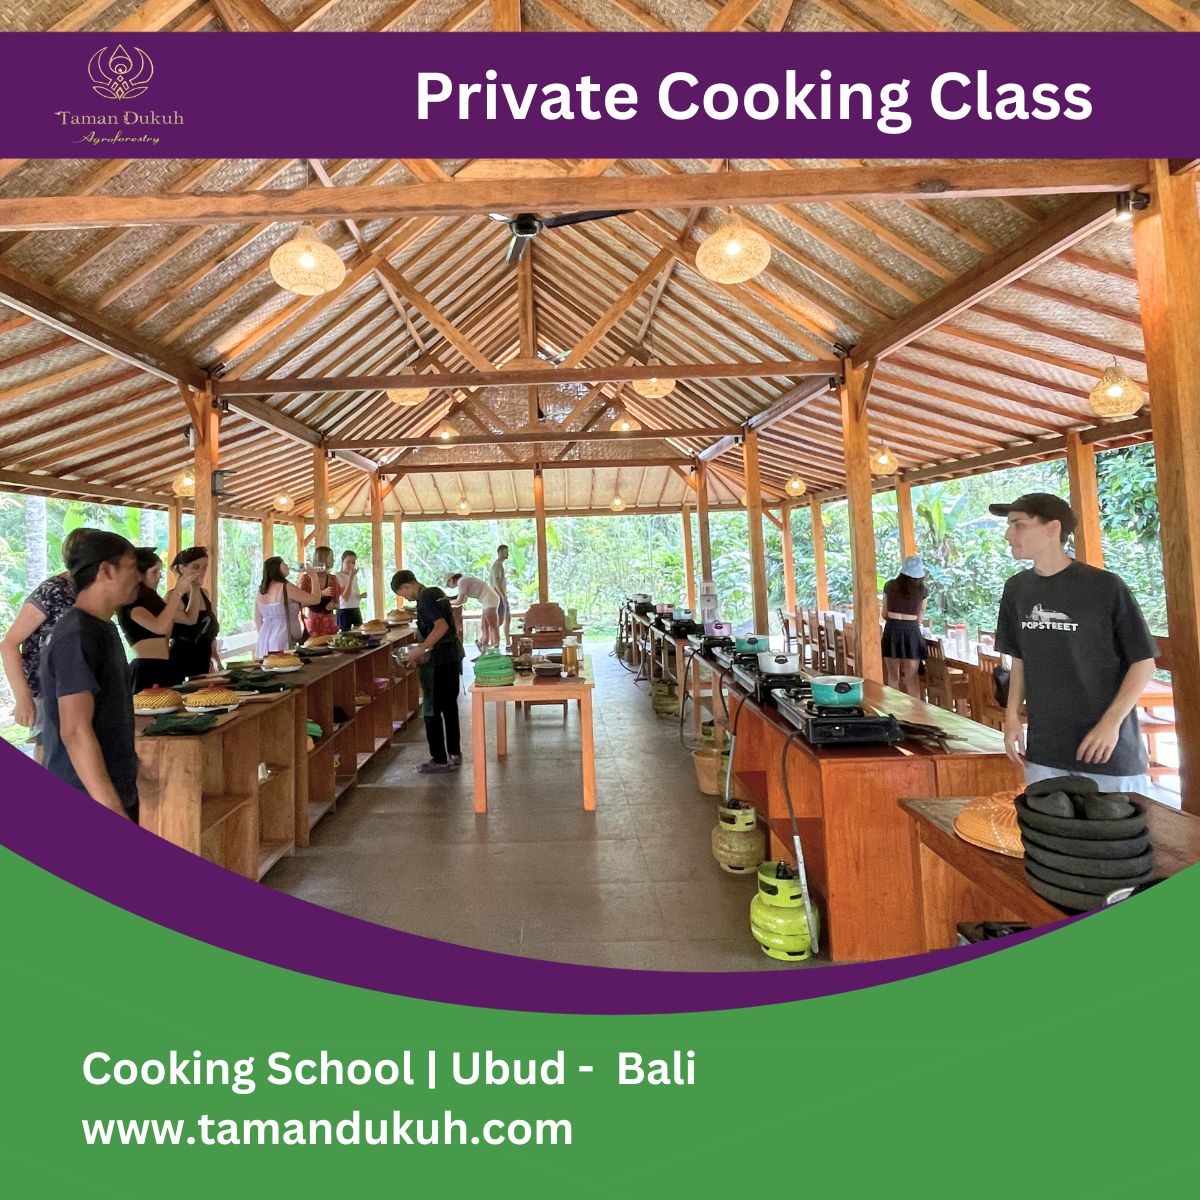 taman dukuh private cooking class